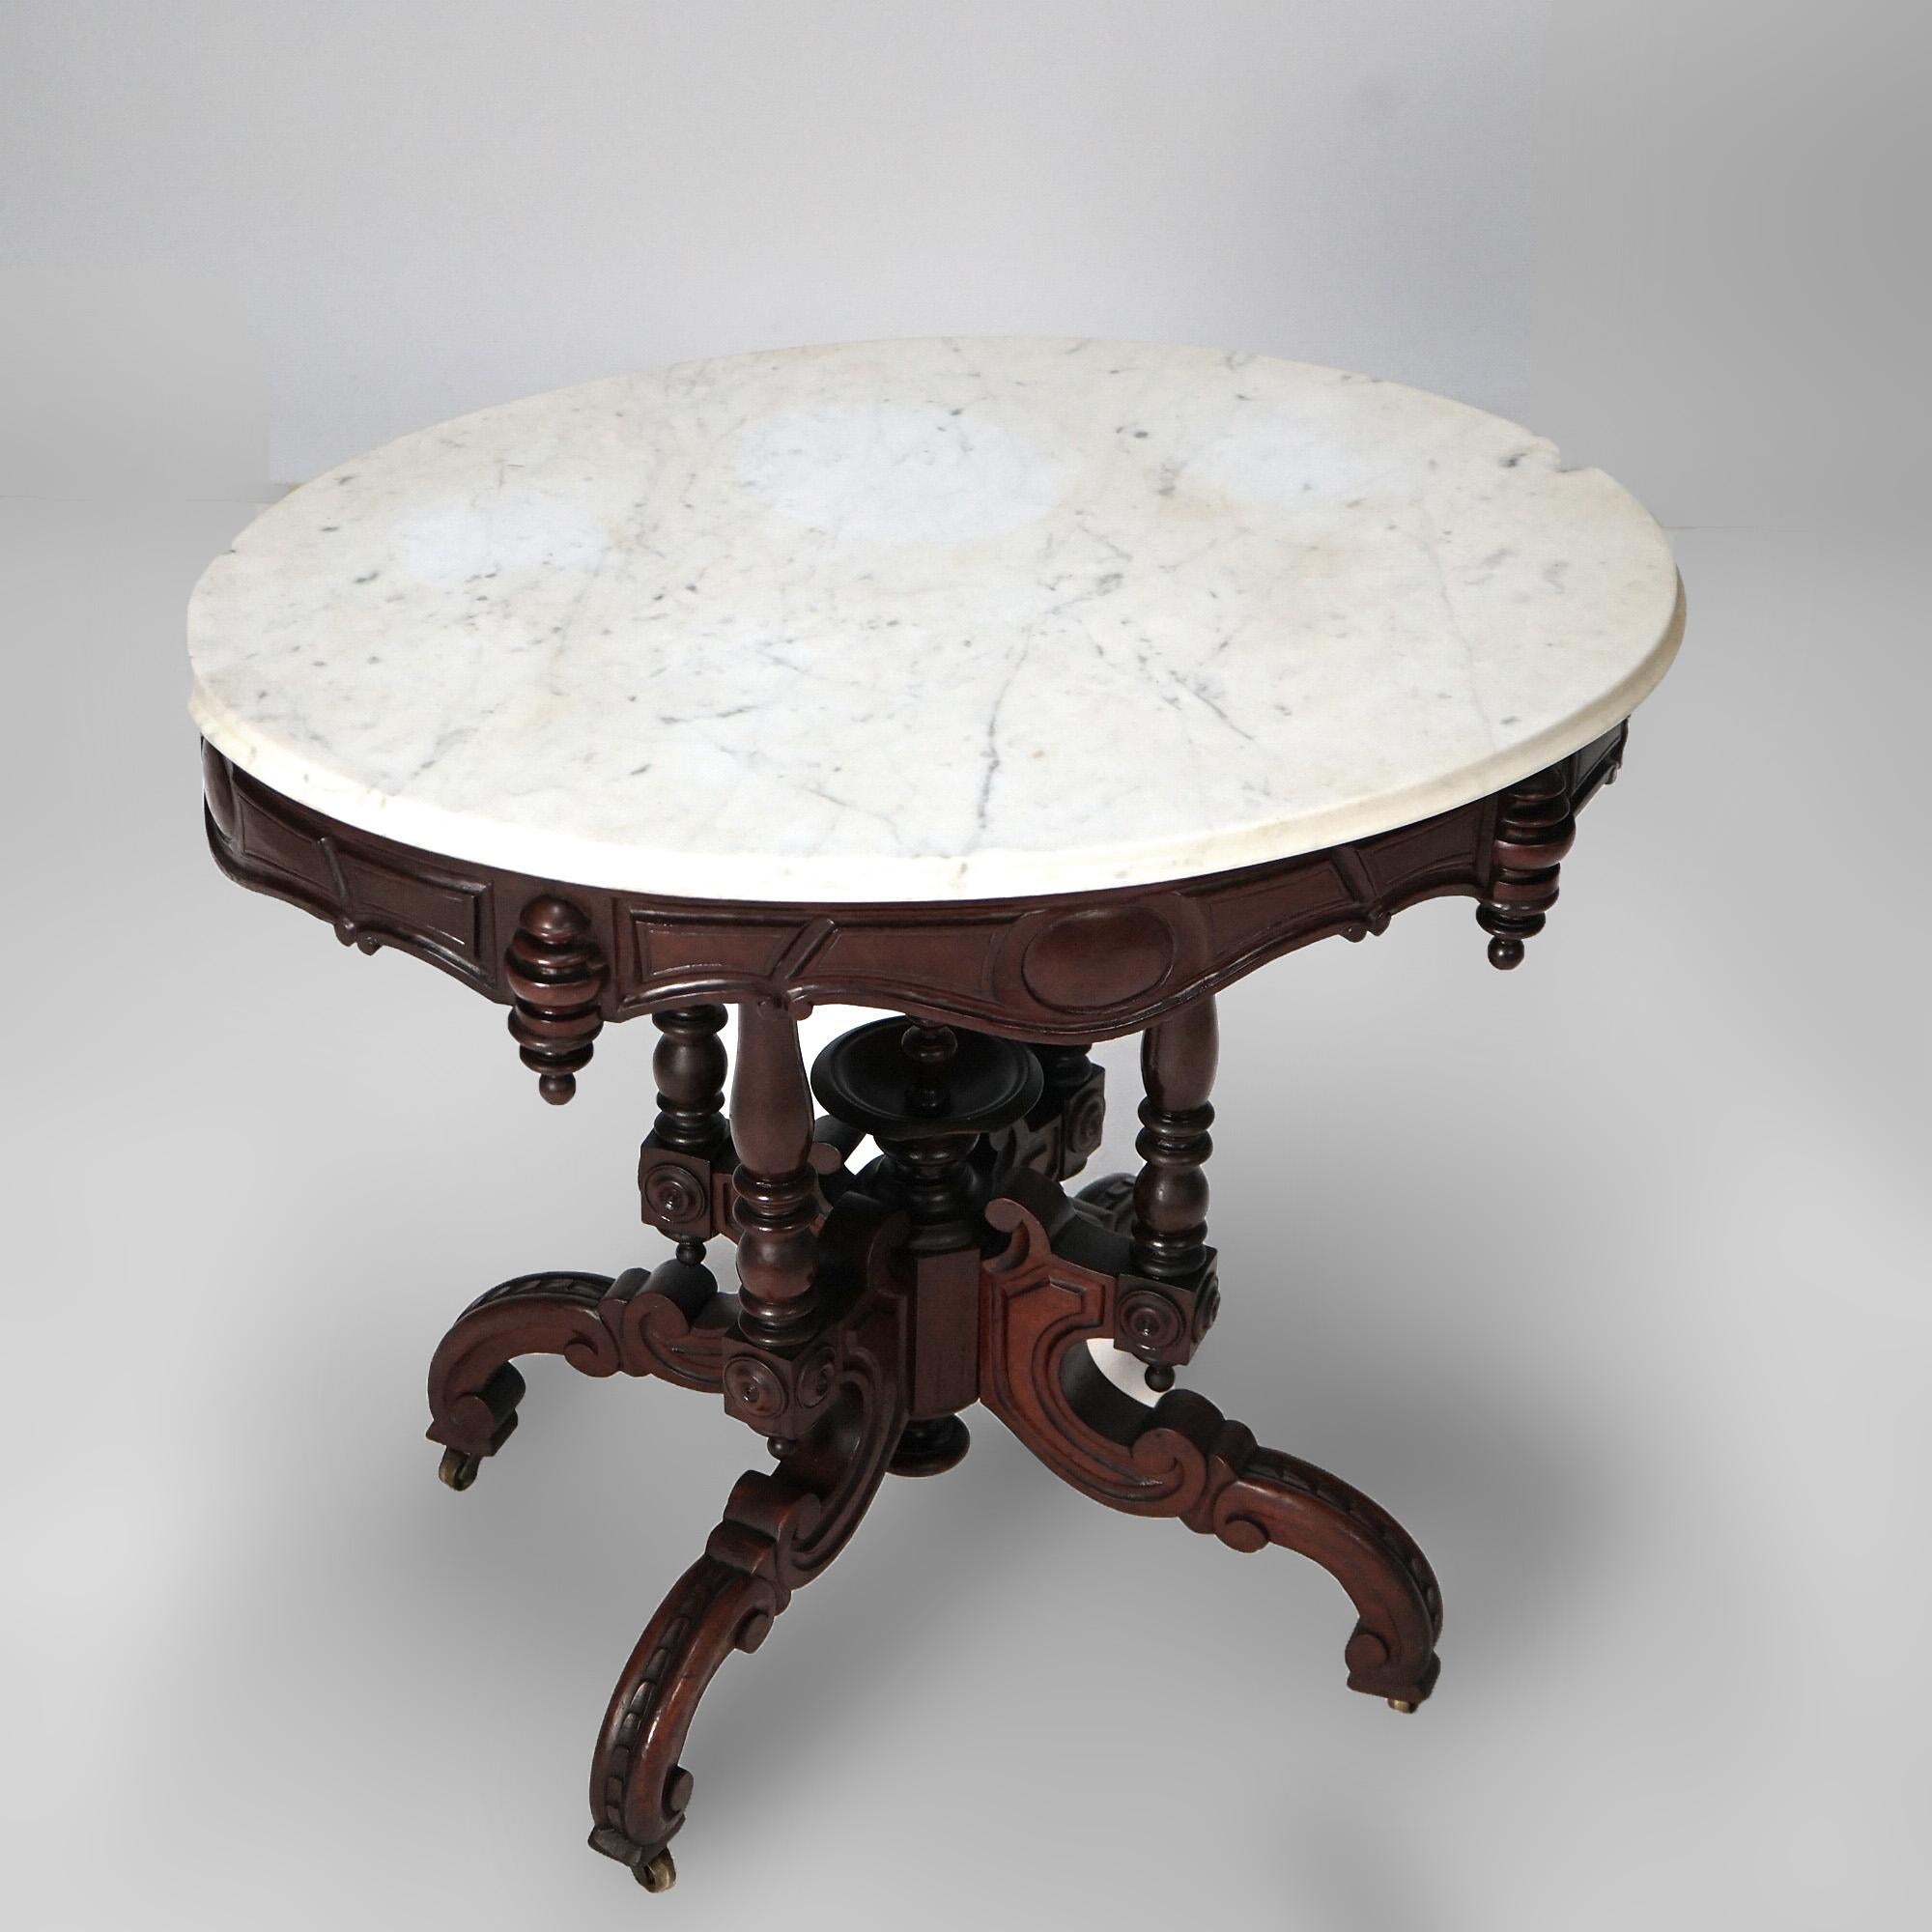 Antique Renaissance Revival Brooks Walnut Oval Marble Top Parlor Table c1890 For Sale 9